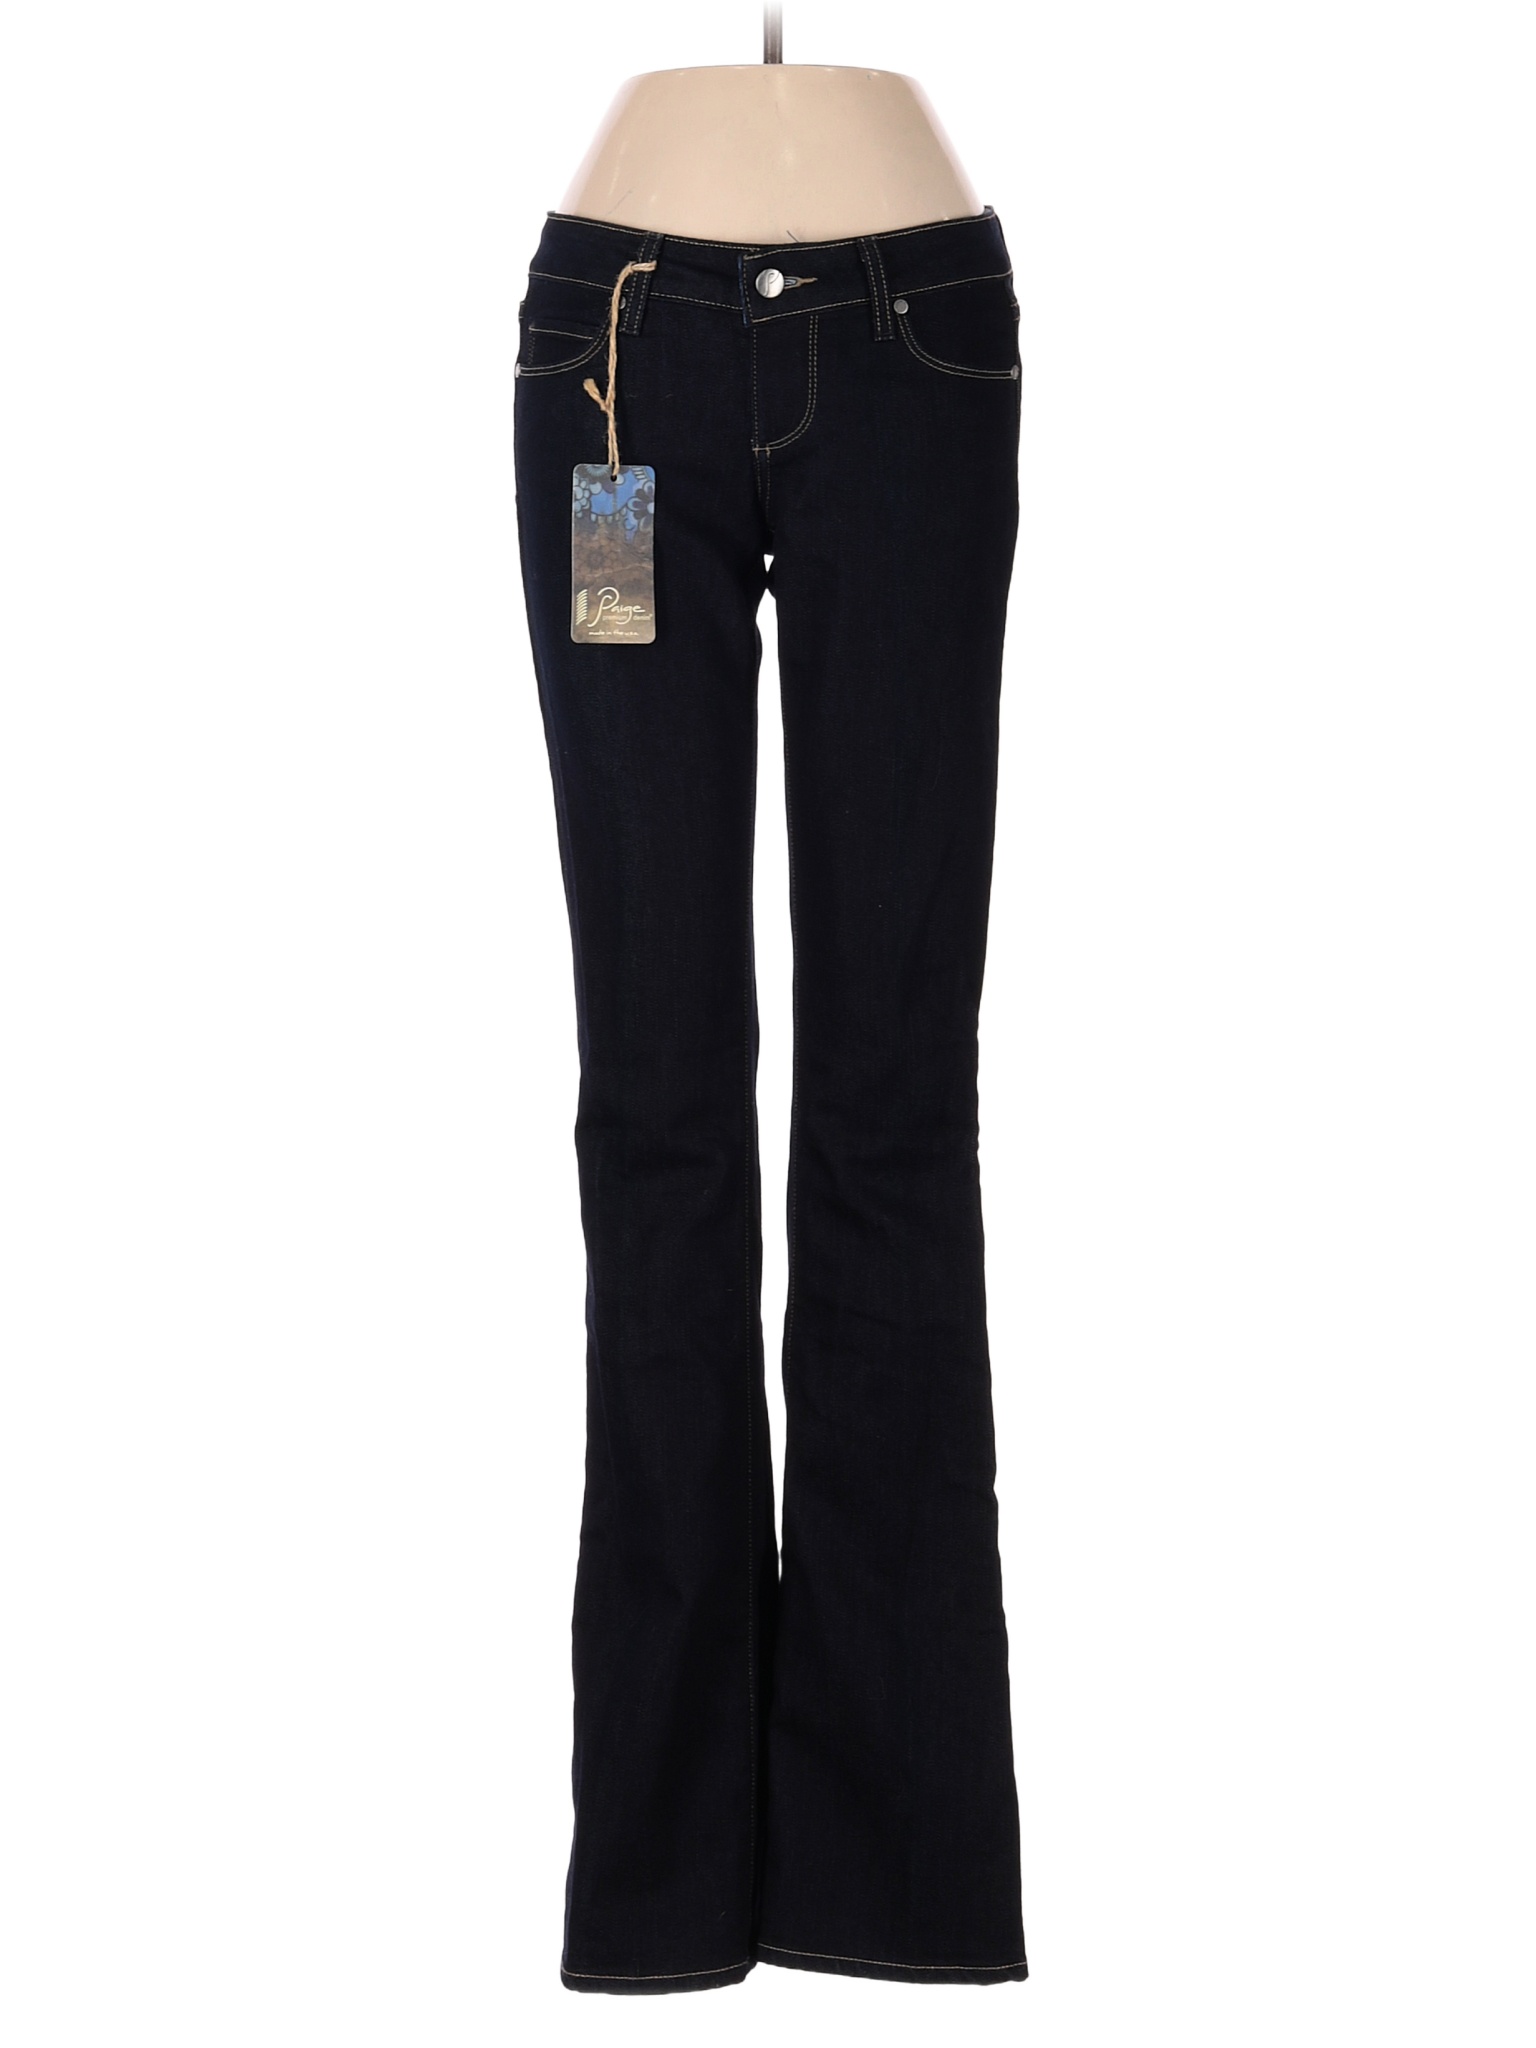 Paige Solid Black Blue Jeans 24 Waist - 78% off | ThredUp